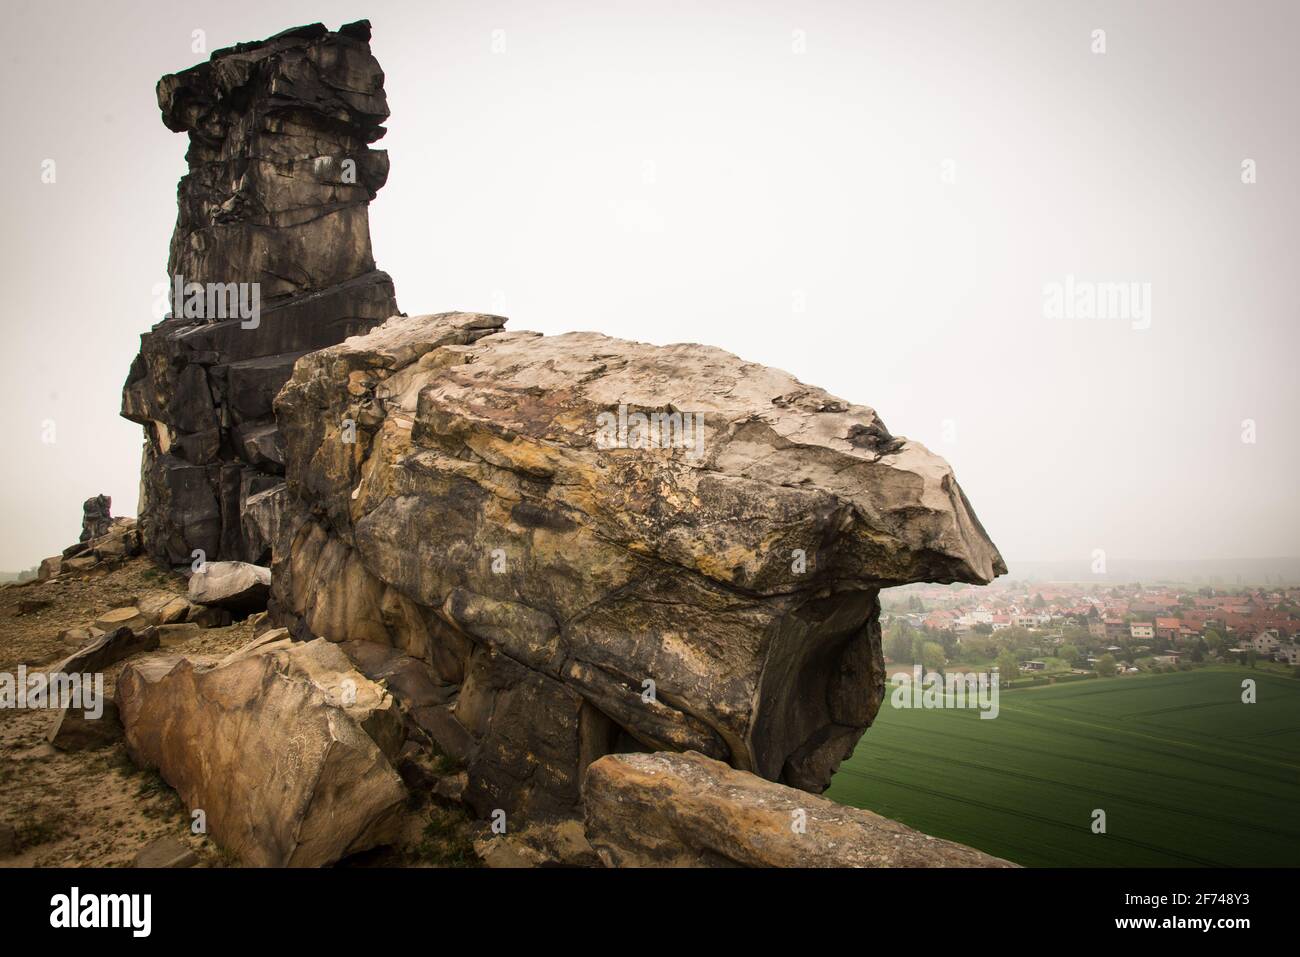 Die Felsen der Teufelsmauer sind ein weithin sichtbares Naturdenkmal - Las rocas de Teufelsmauer son un monumento natural visible desde lejos Foto de stock